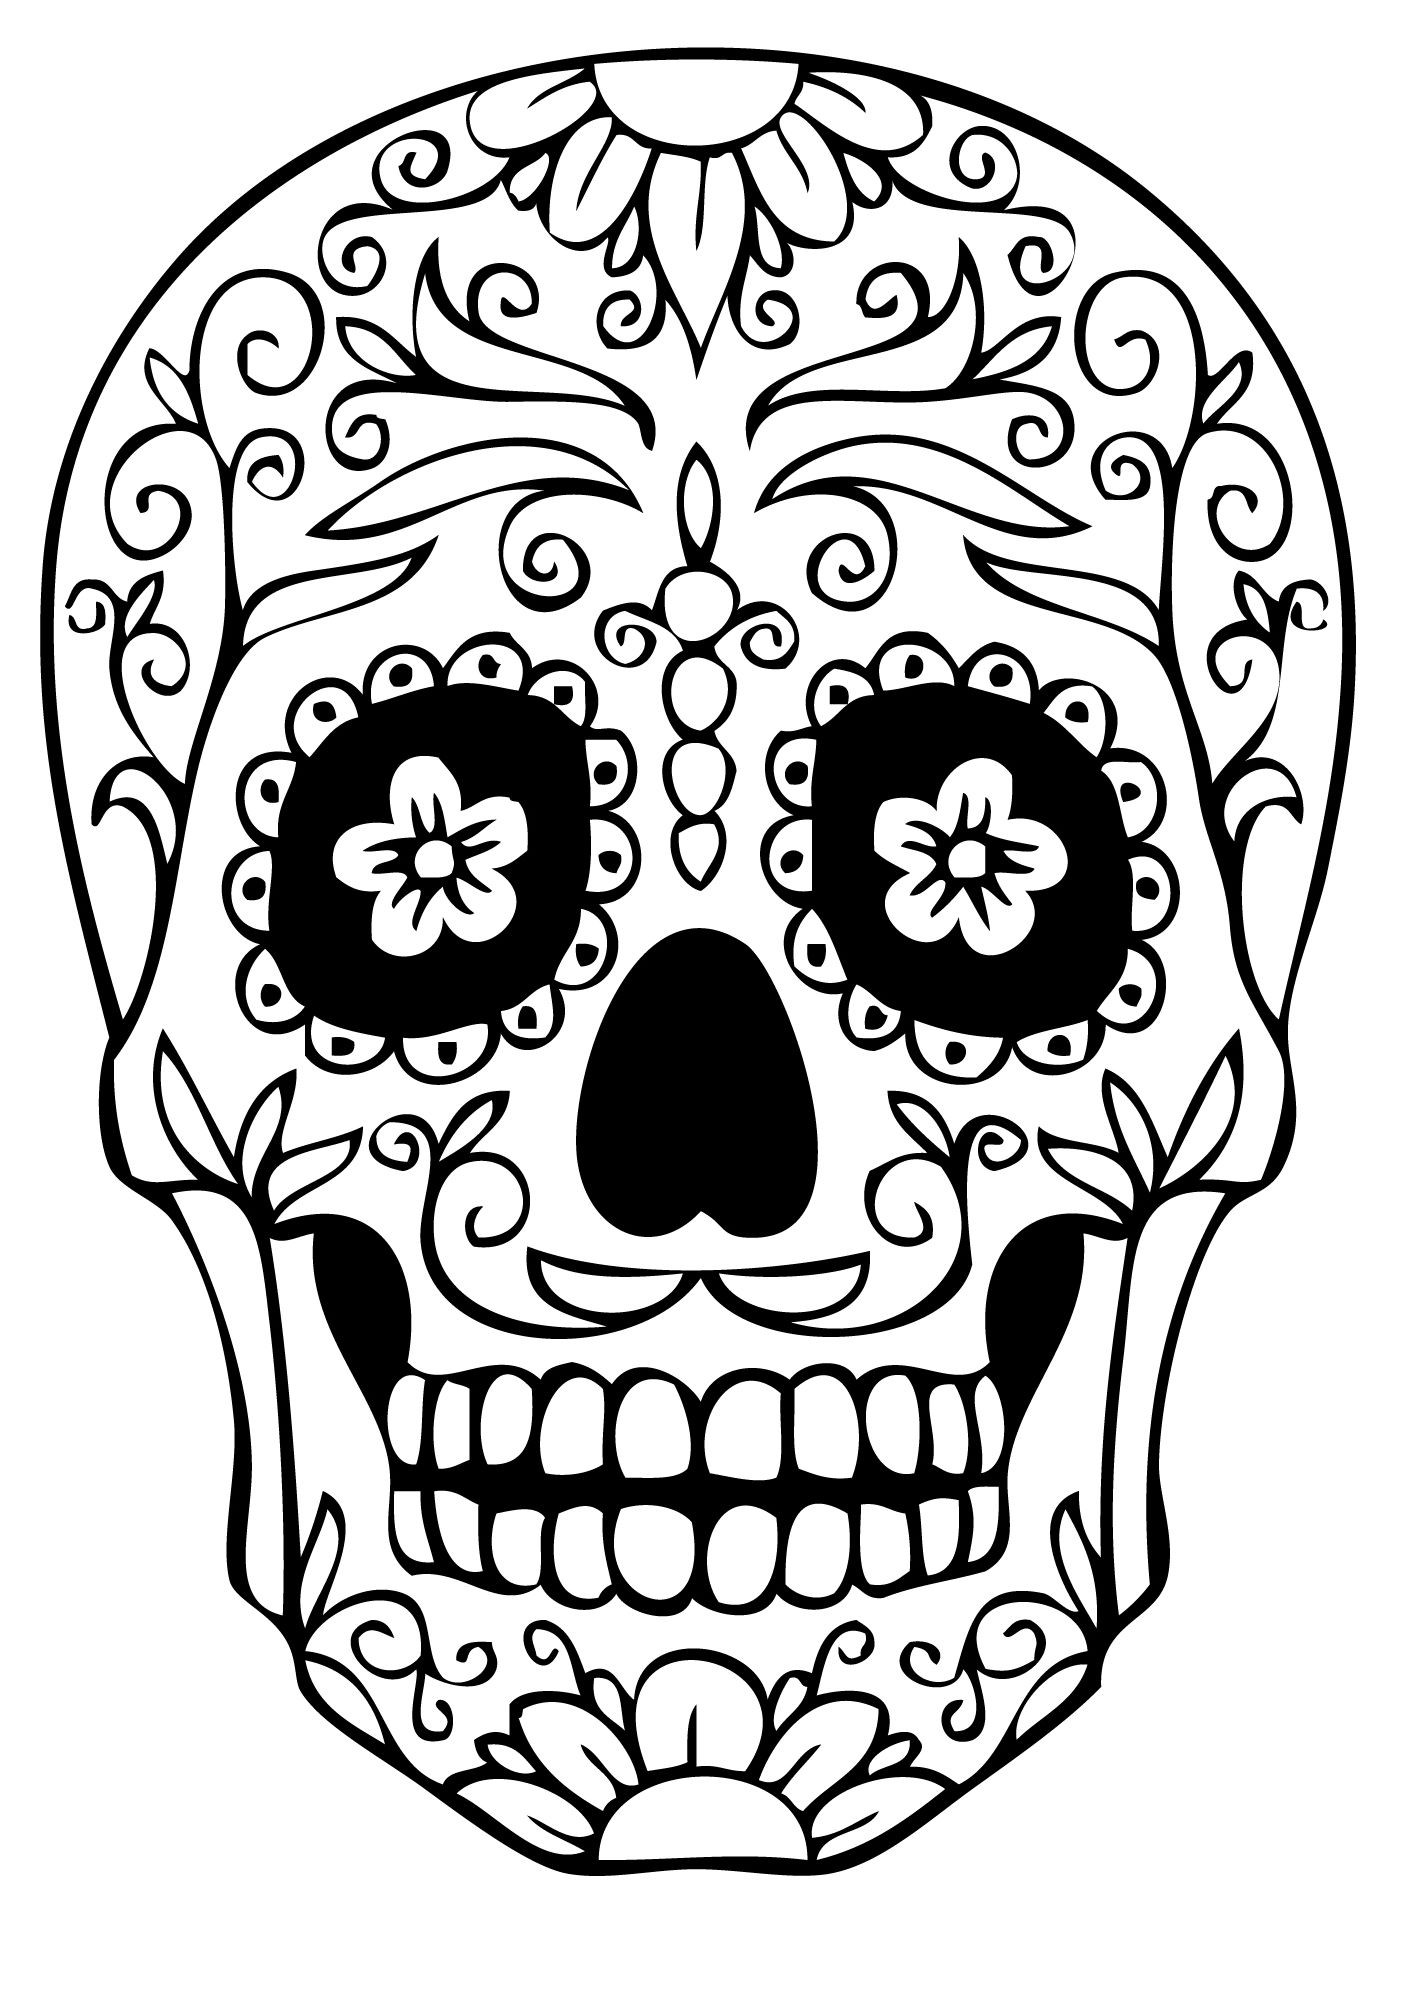 Sugar Skull Coloring Pages For Kids
 Sugar Skull Coloring Pages Best Coloring Pages For Kids